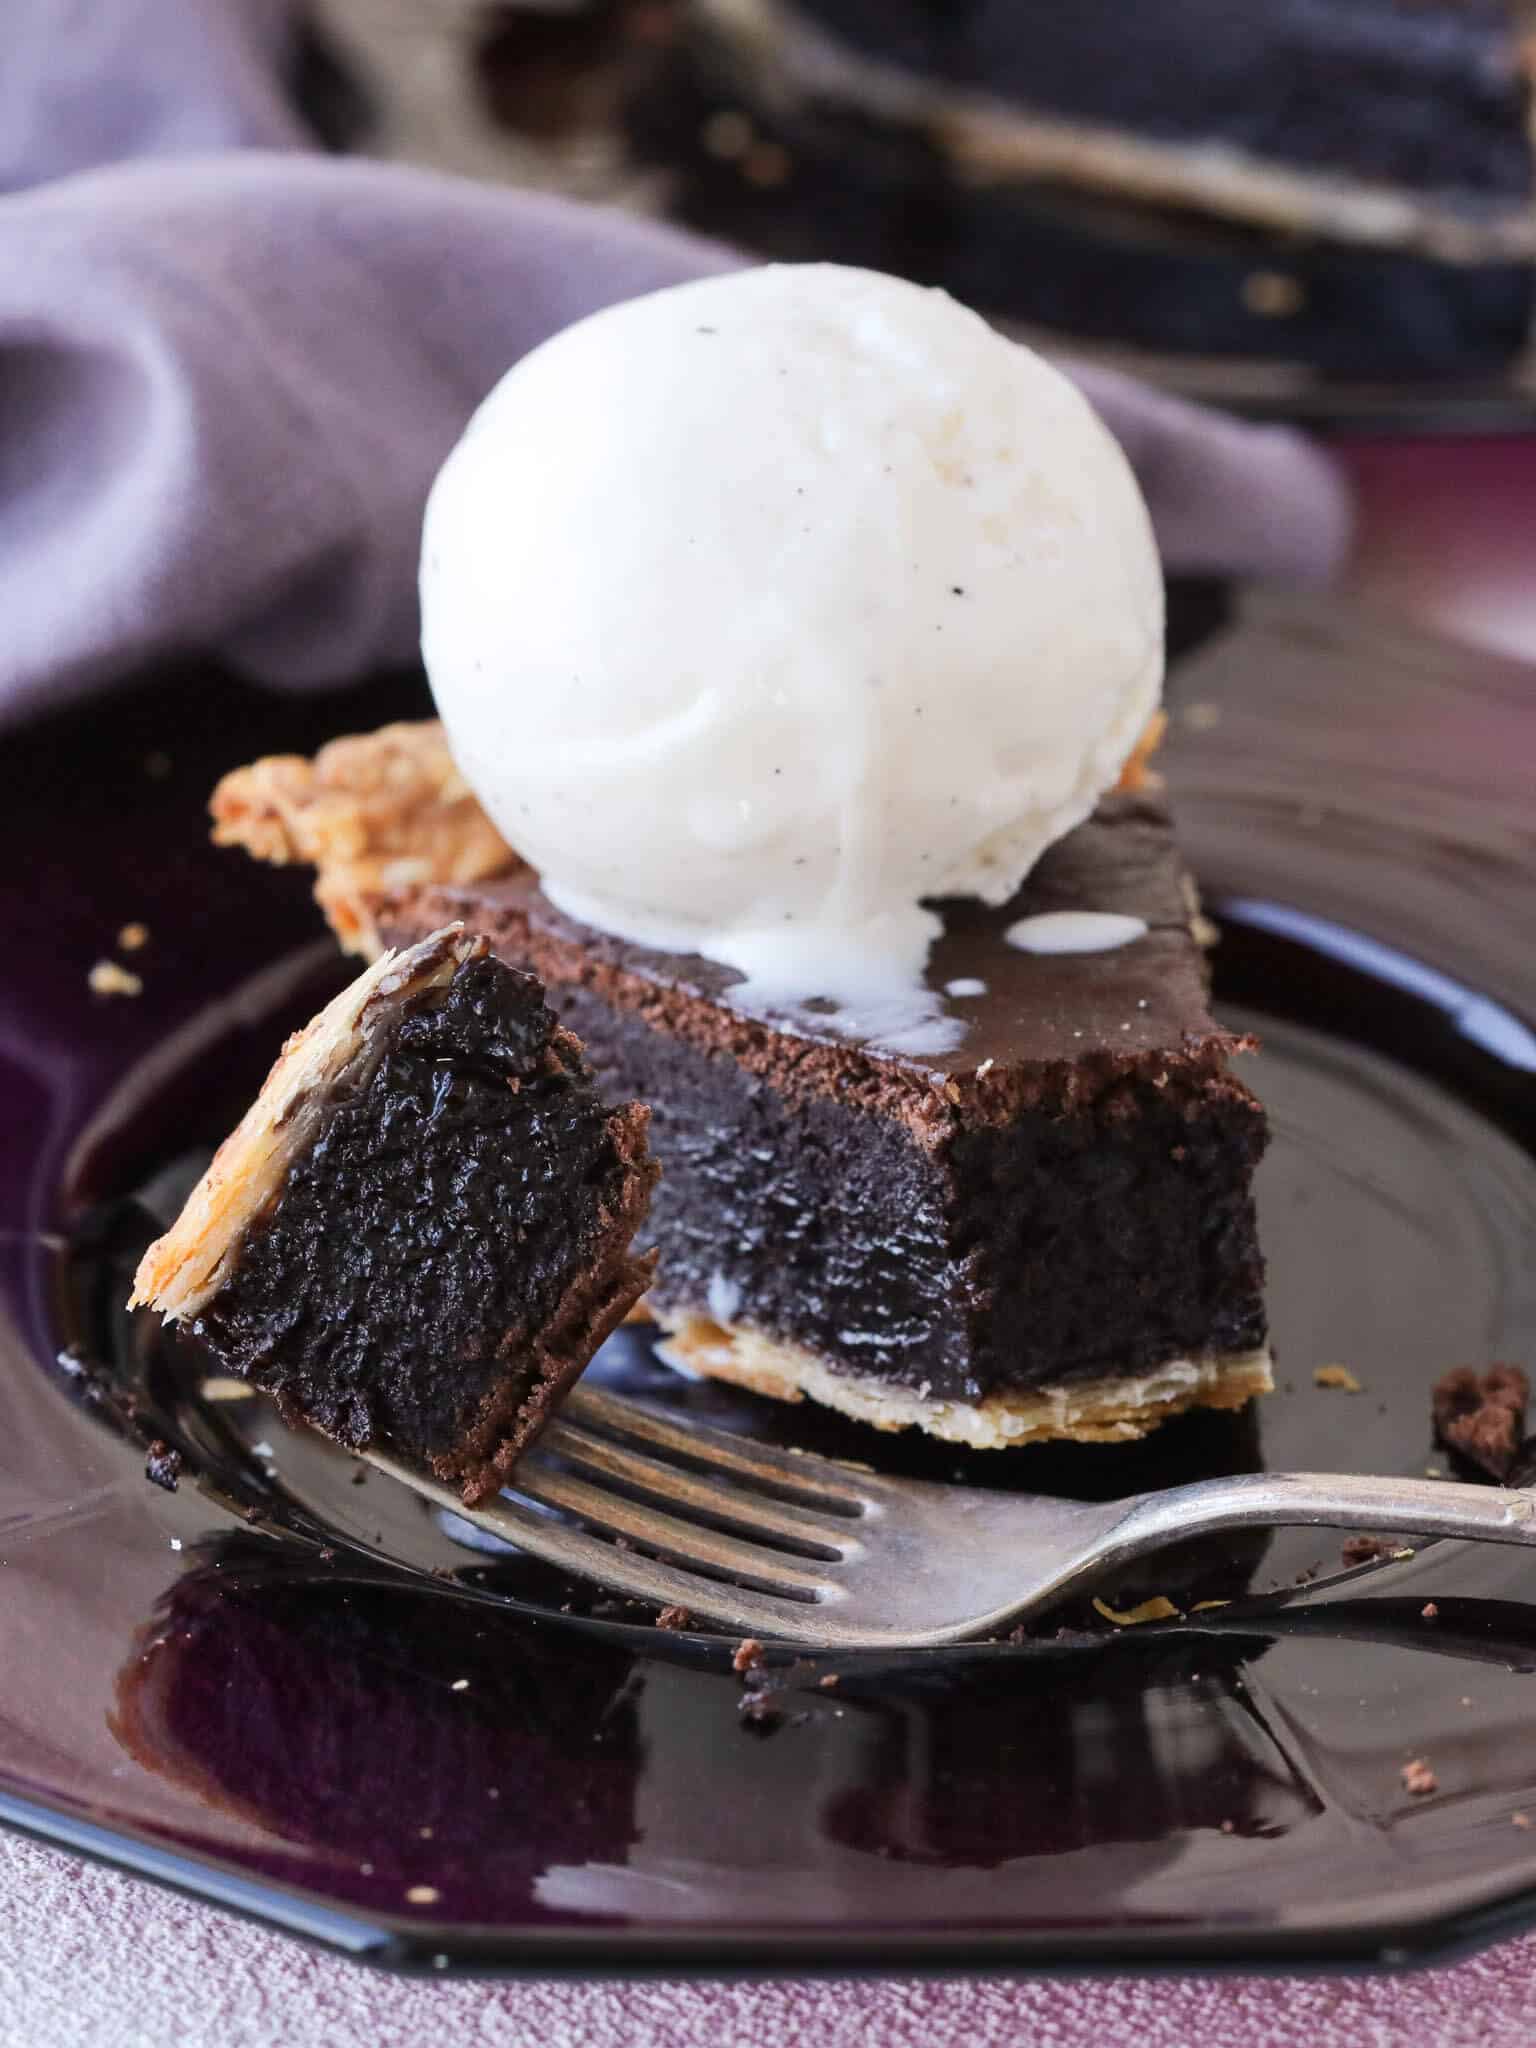 Easy chocolate pie with a scoop of vanilla ice cream.